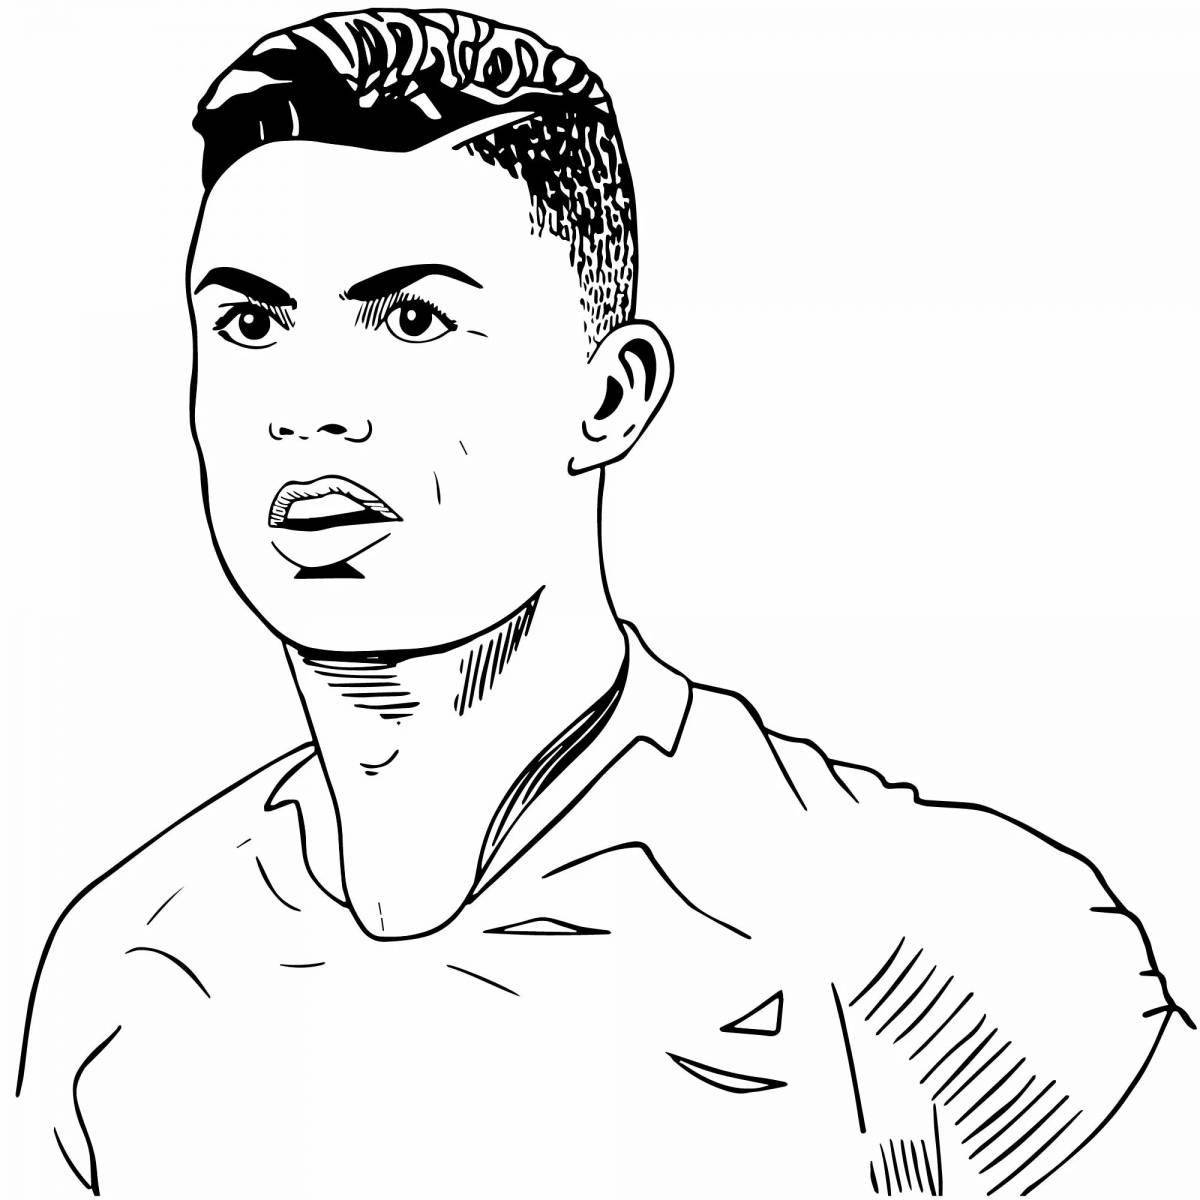 Ronaldo Nibbler's amazing coloring page